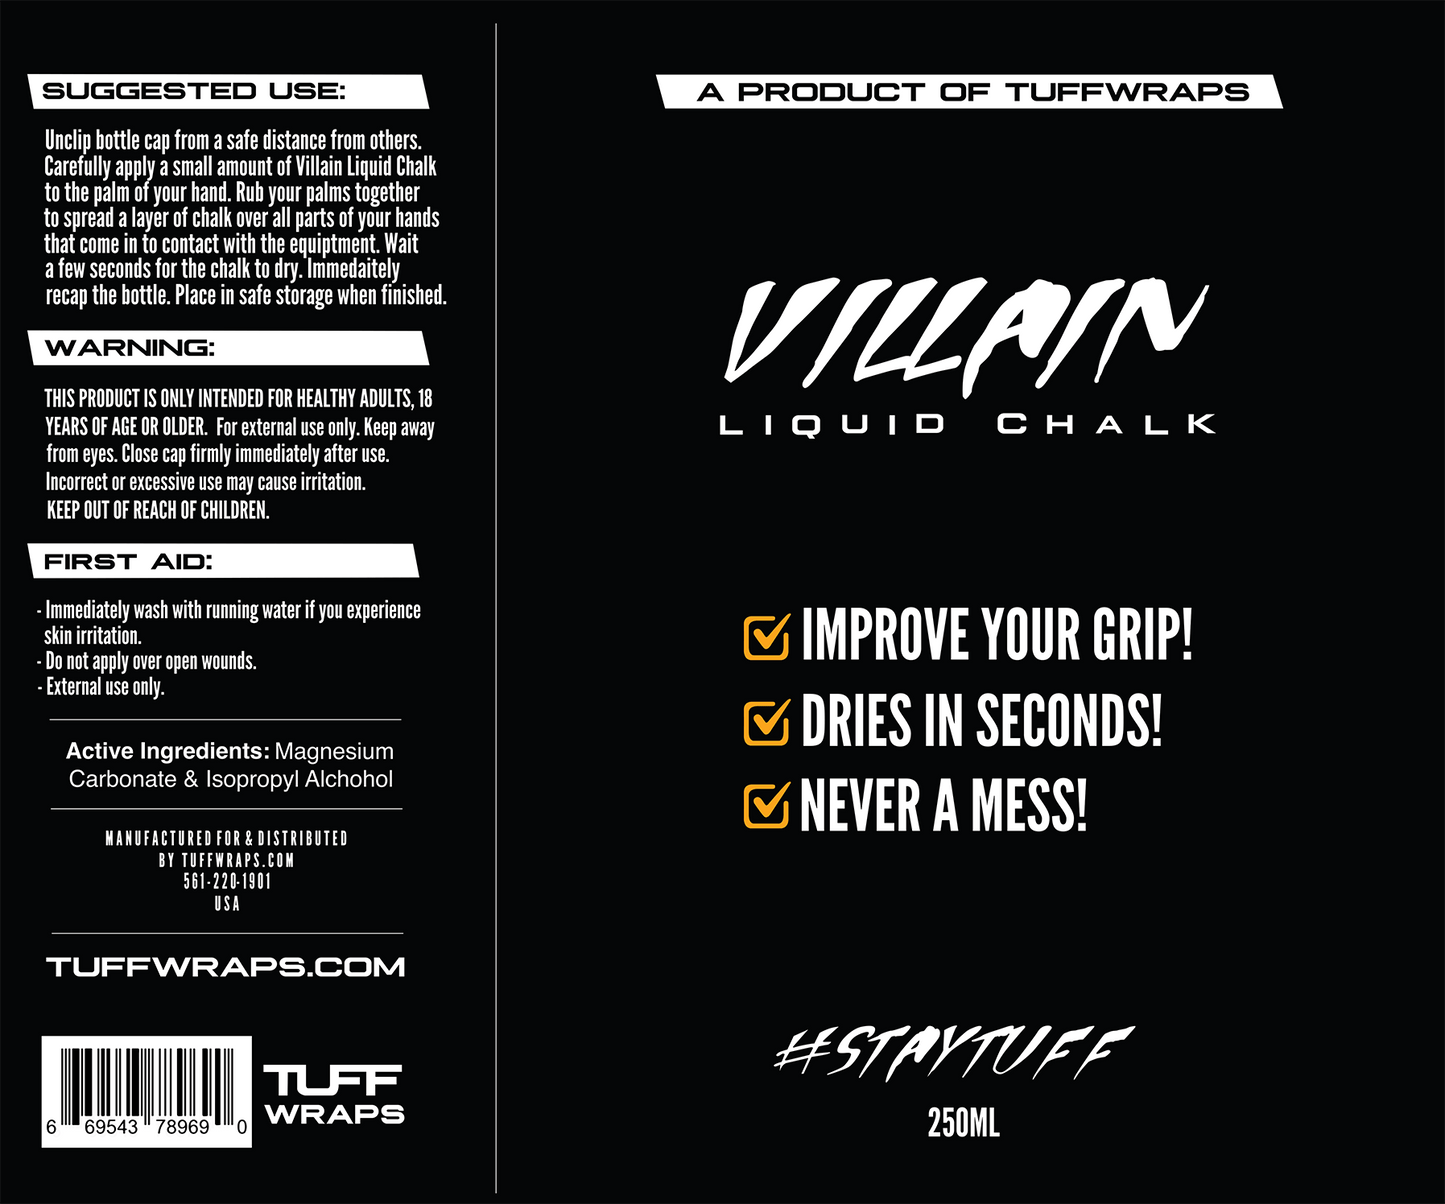 Villain Liquid Chalk TuffWraps.com